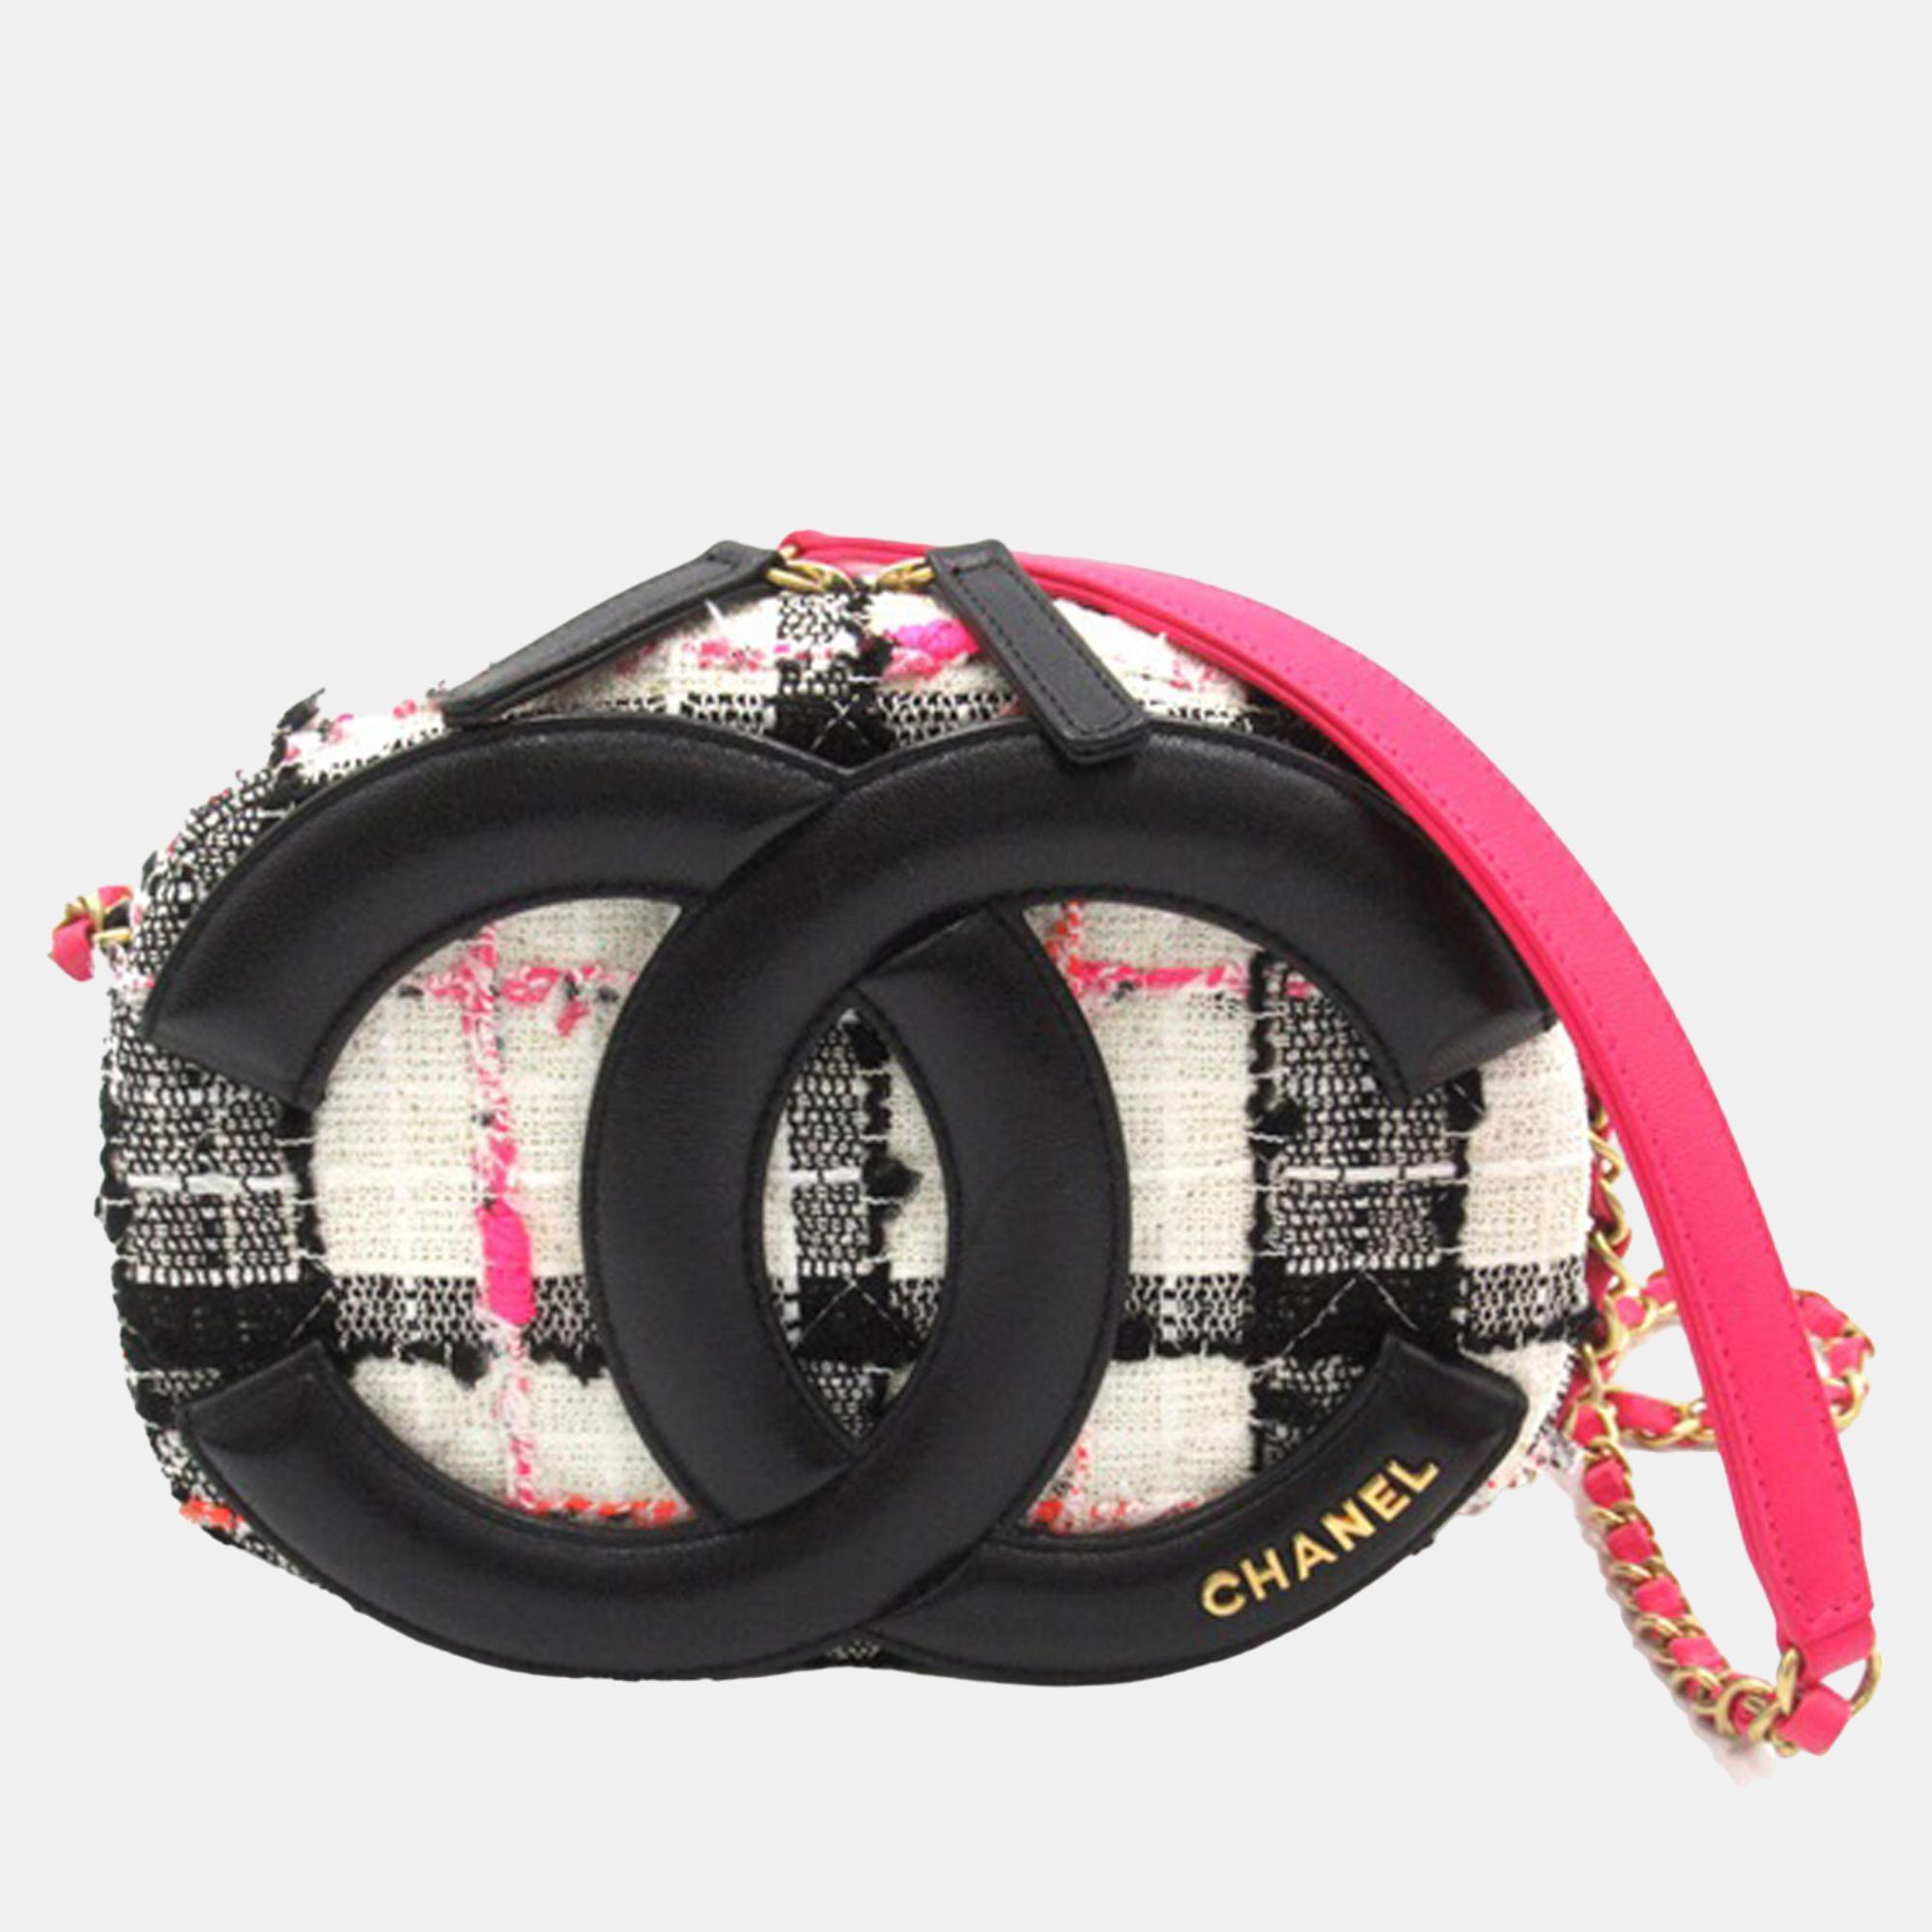 Chanel black/white cc tweed camera bag